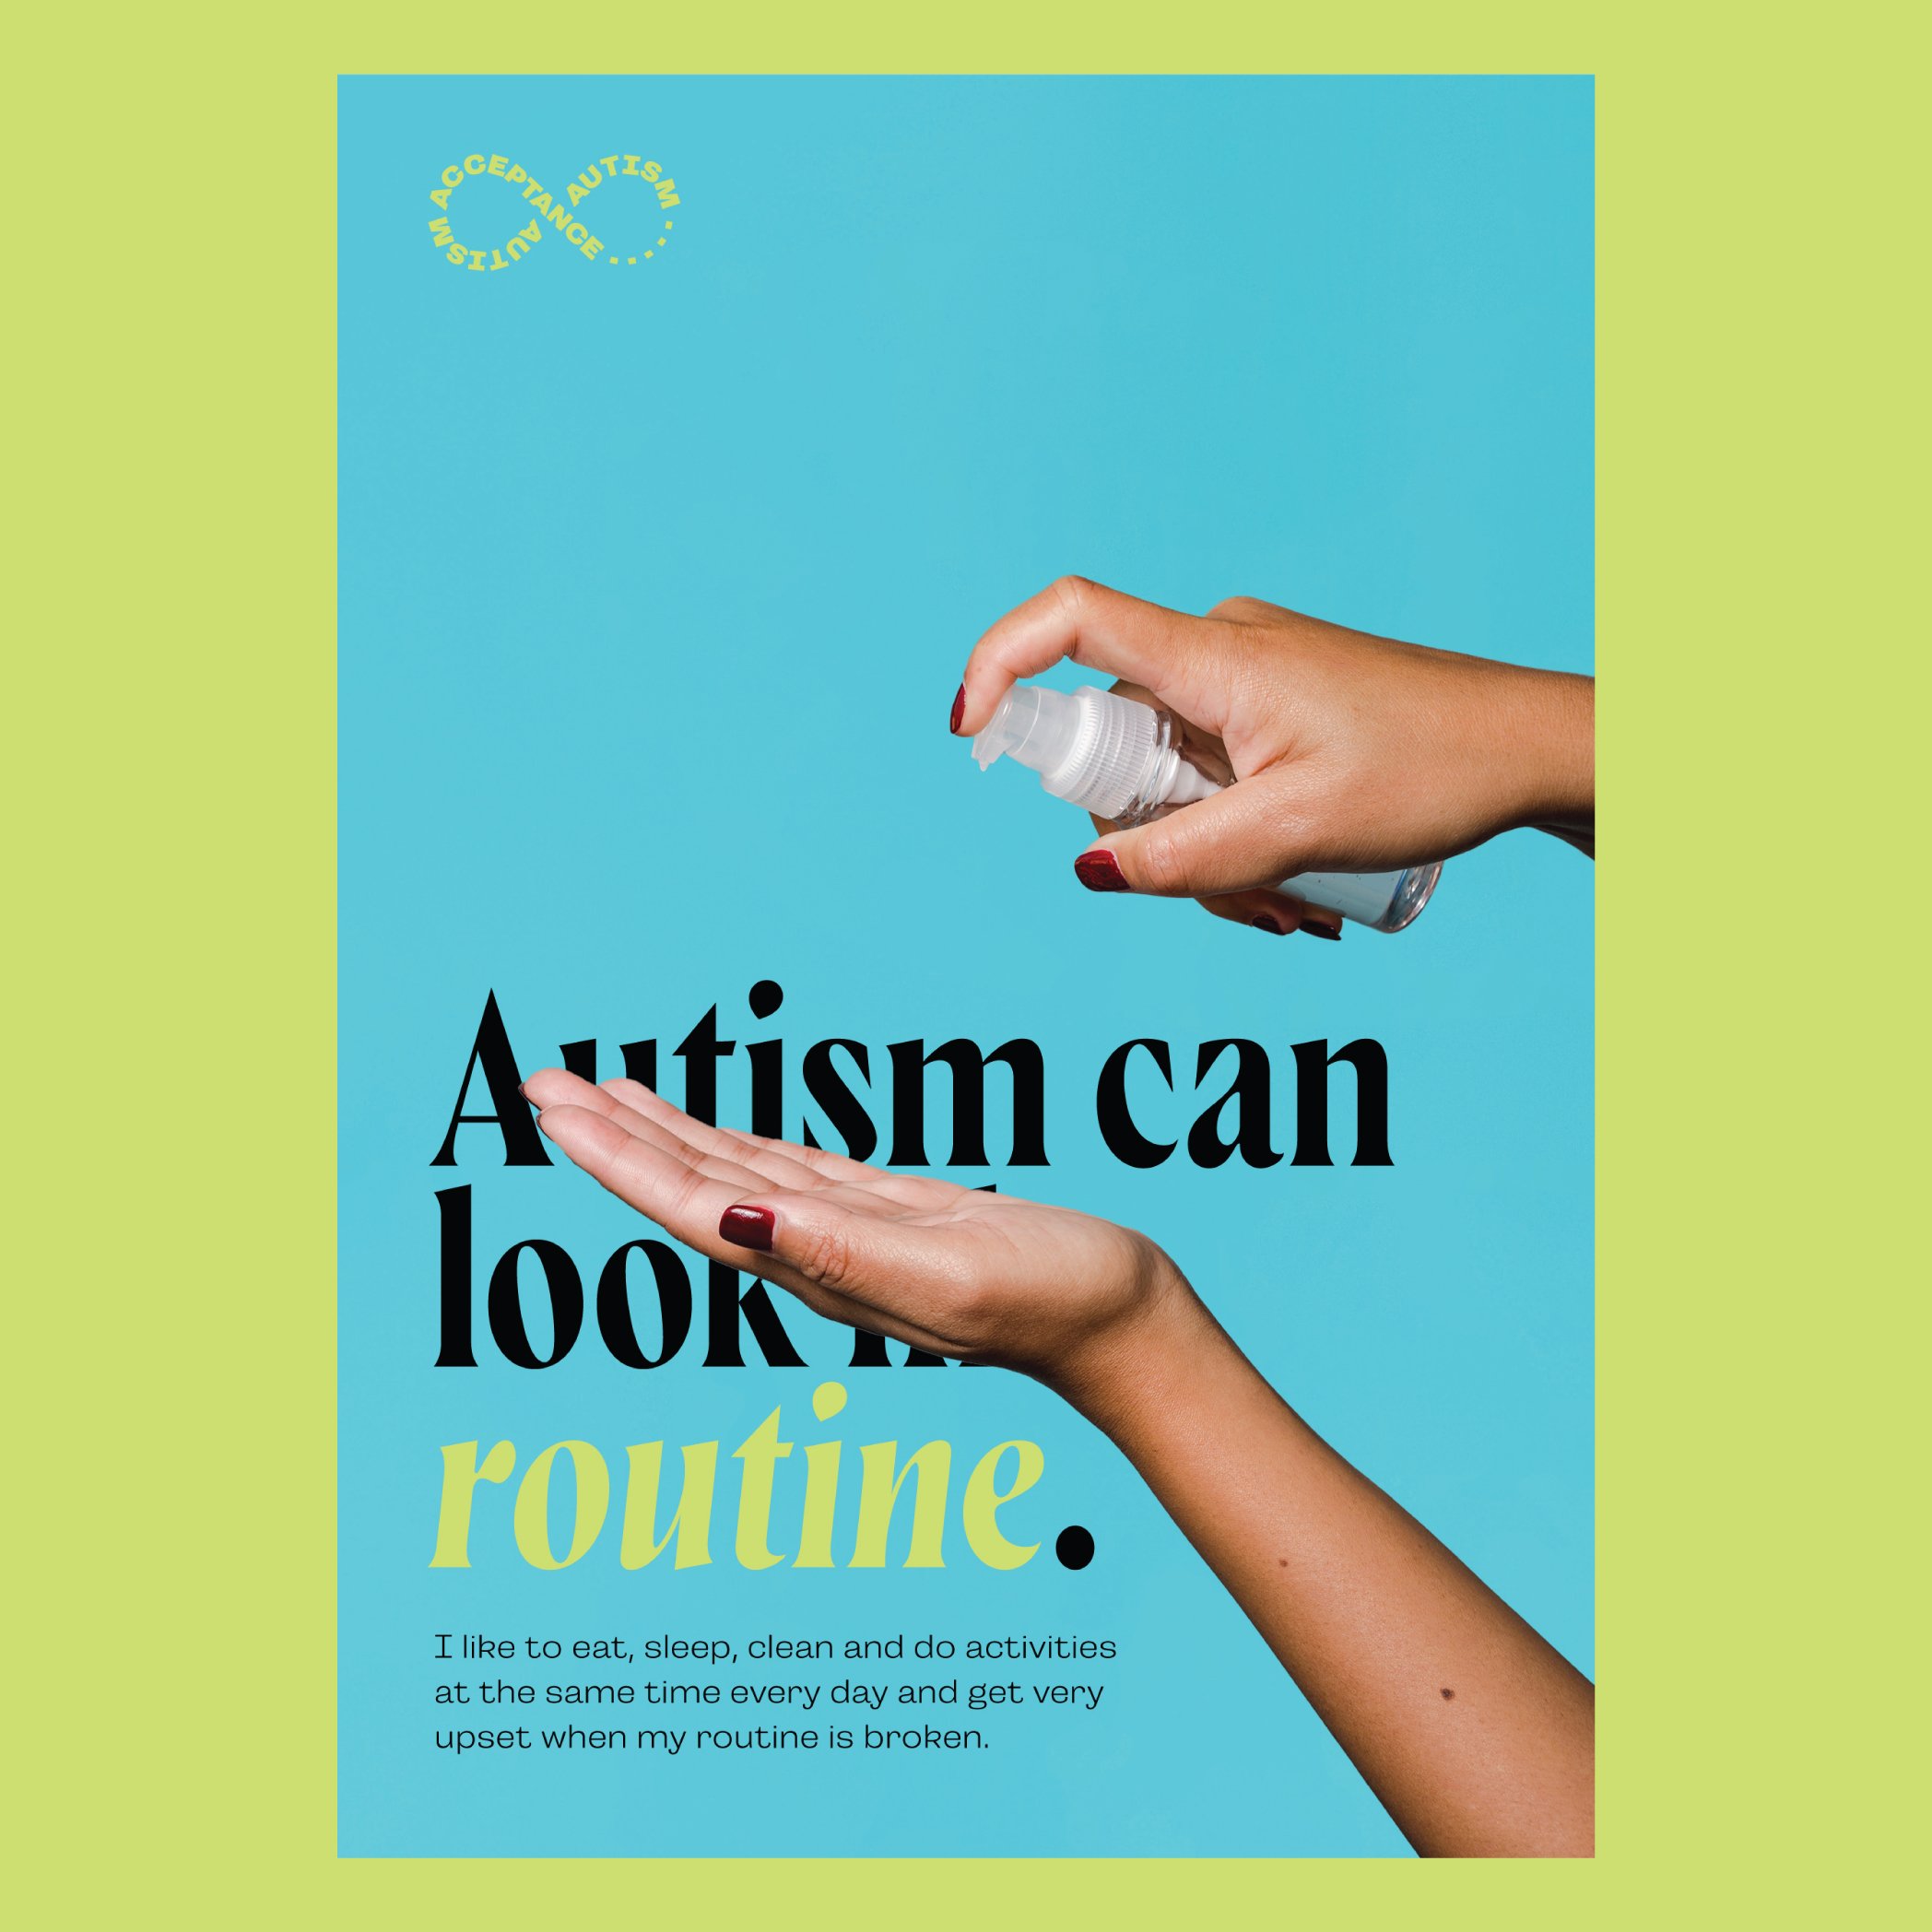 Autism Awareness Week branding and poster design